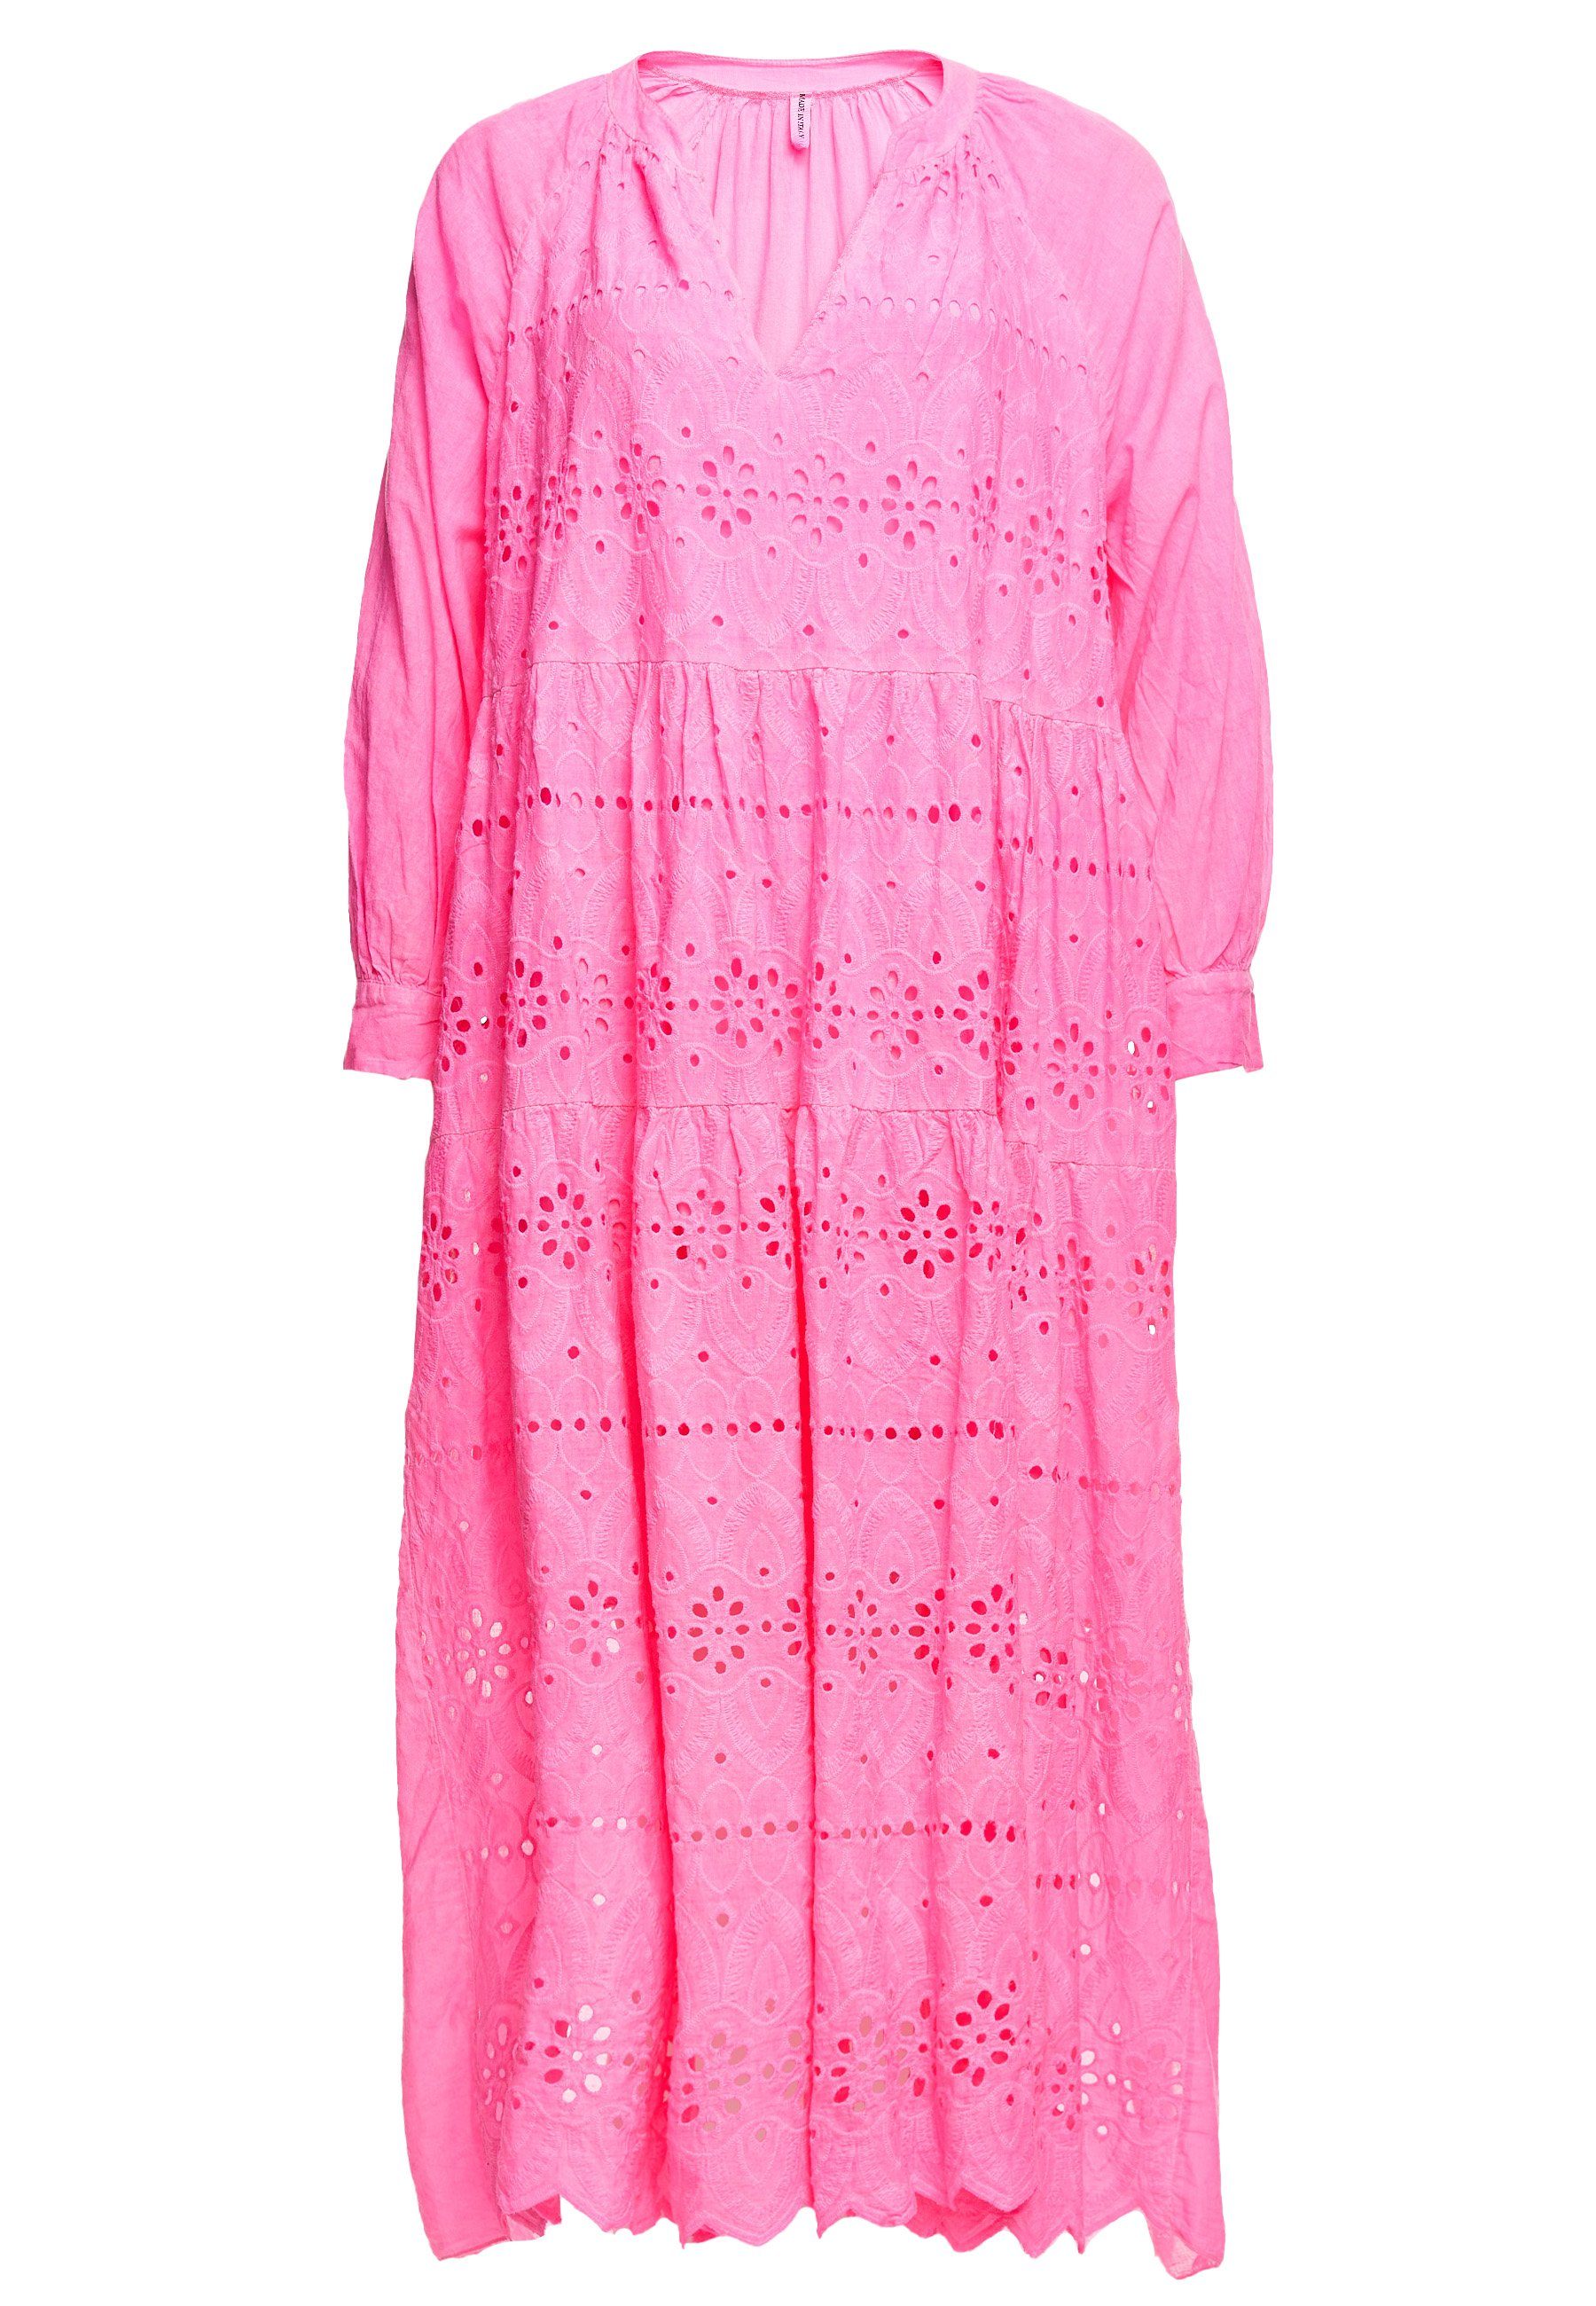 Decay Jerseykleid in tollem Design rosa | Jerseykleider